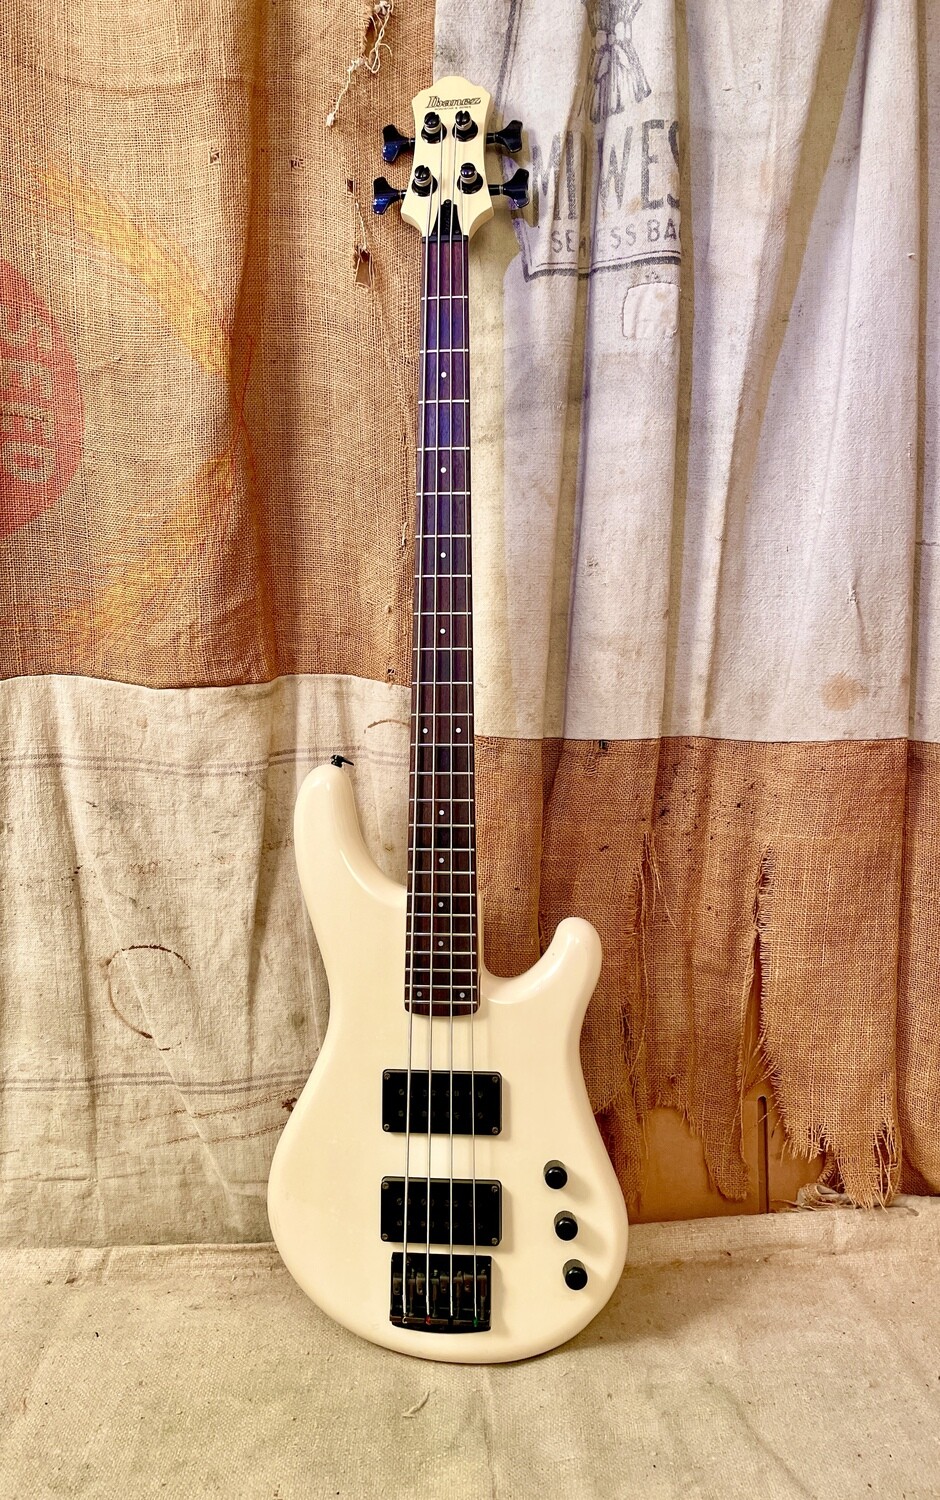 1984 Ibanez Roadstar II White RB-850 Bass Guitar